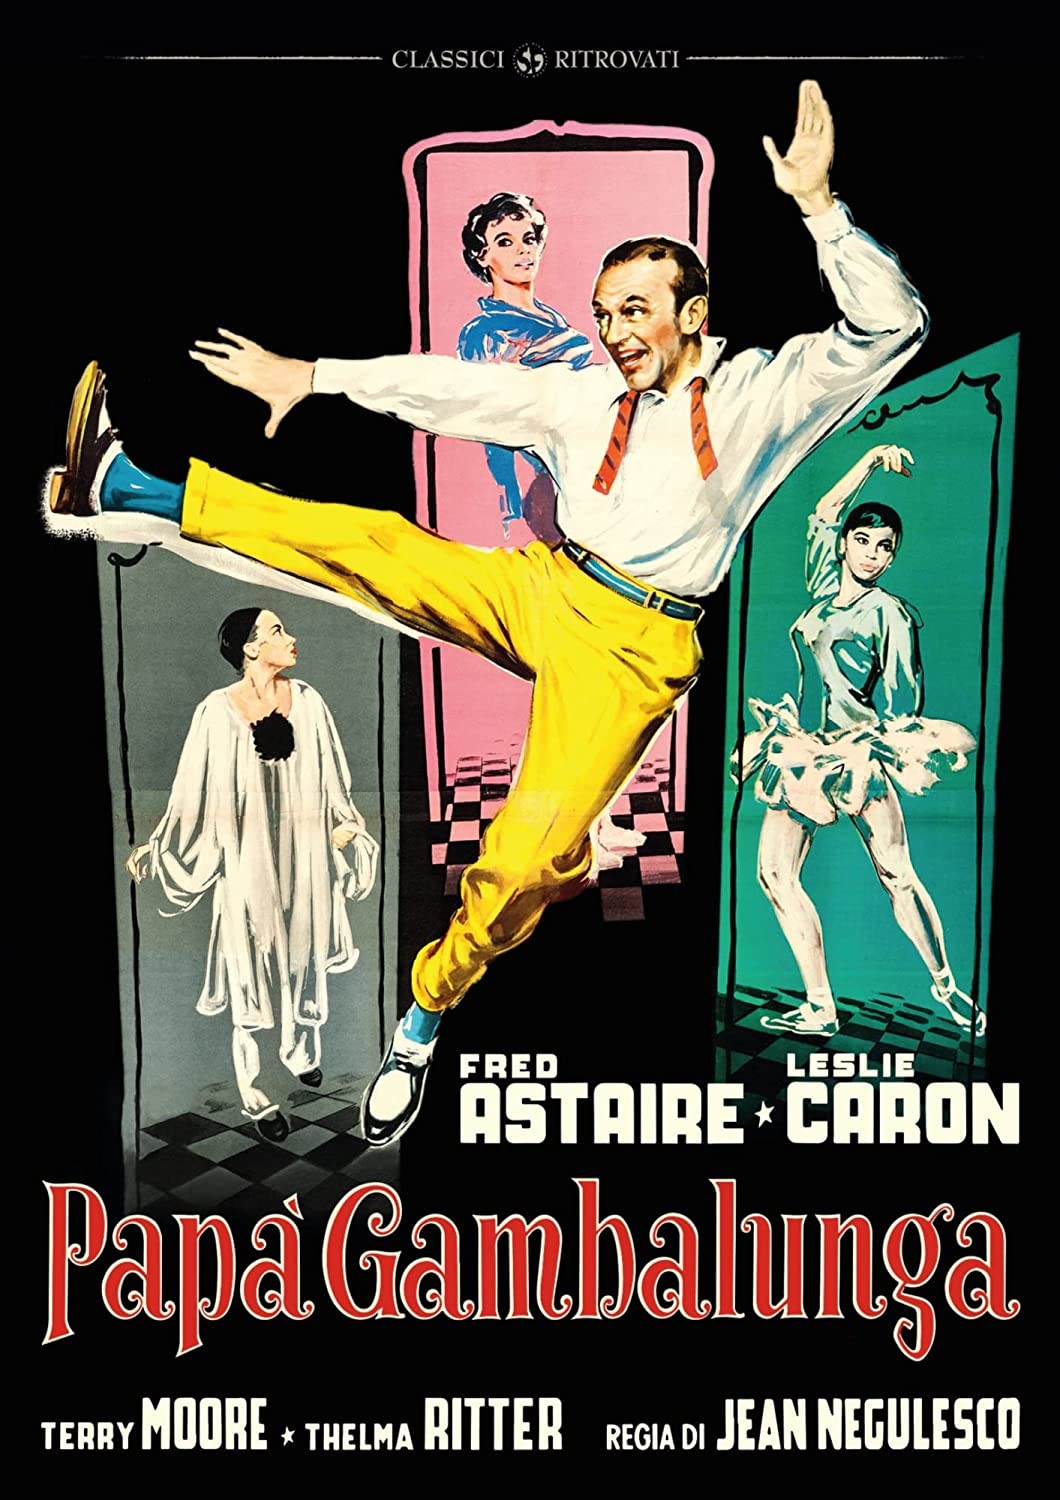 Papà Gambalunga (1955)